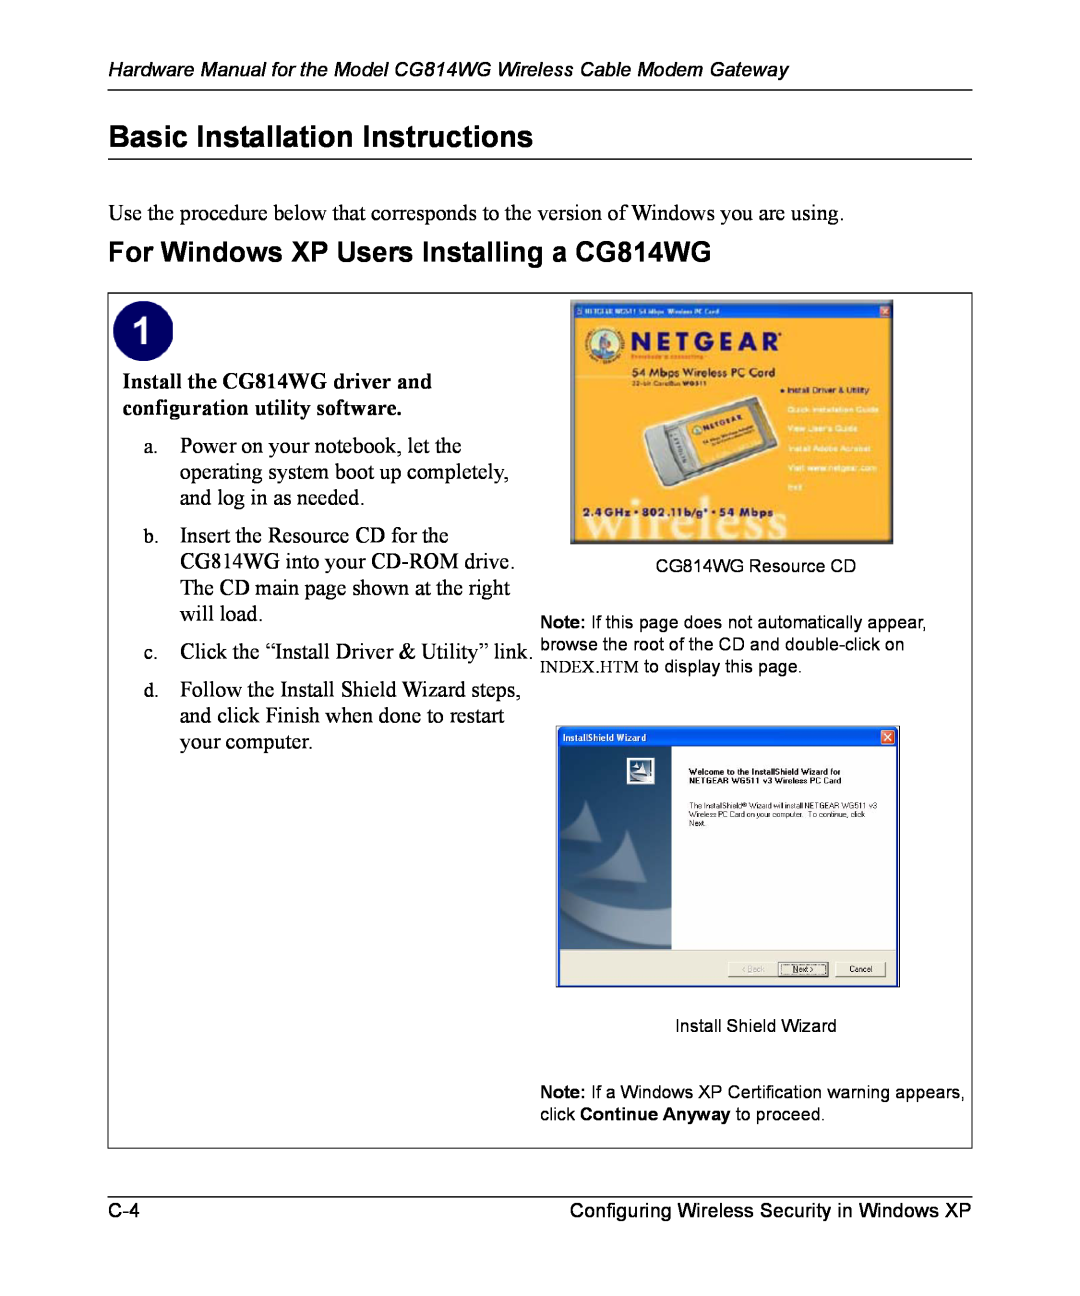 NETGEAR manual Basic Installation Instructions, For Windows XP Users Installing a CG814WG 